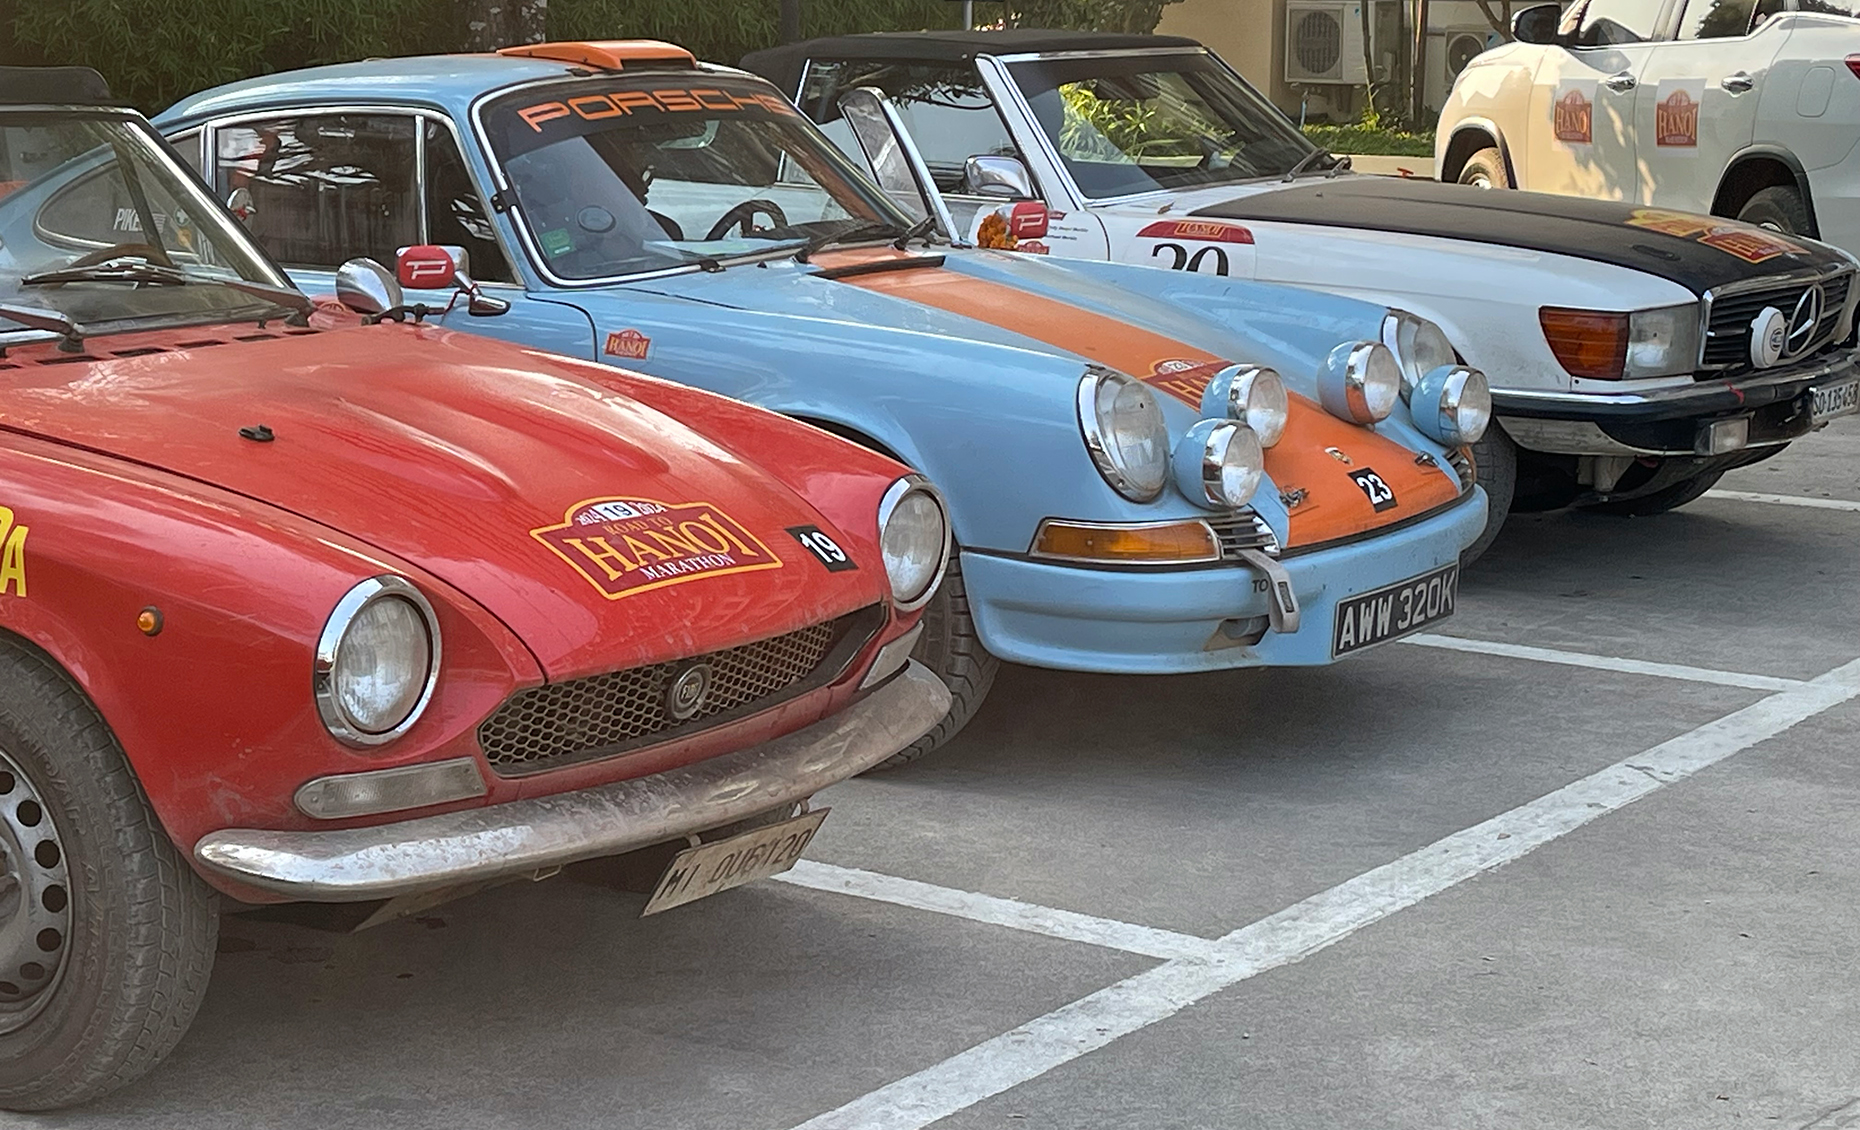 The Porsche and friends